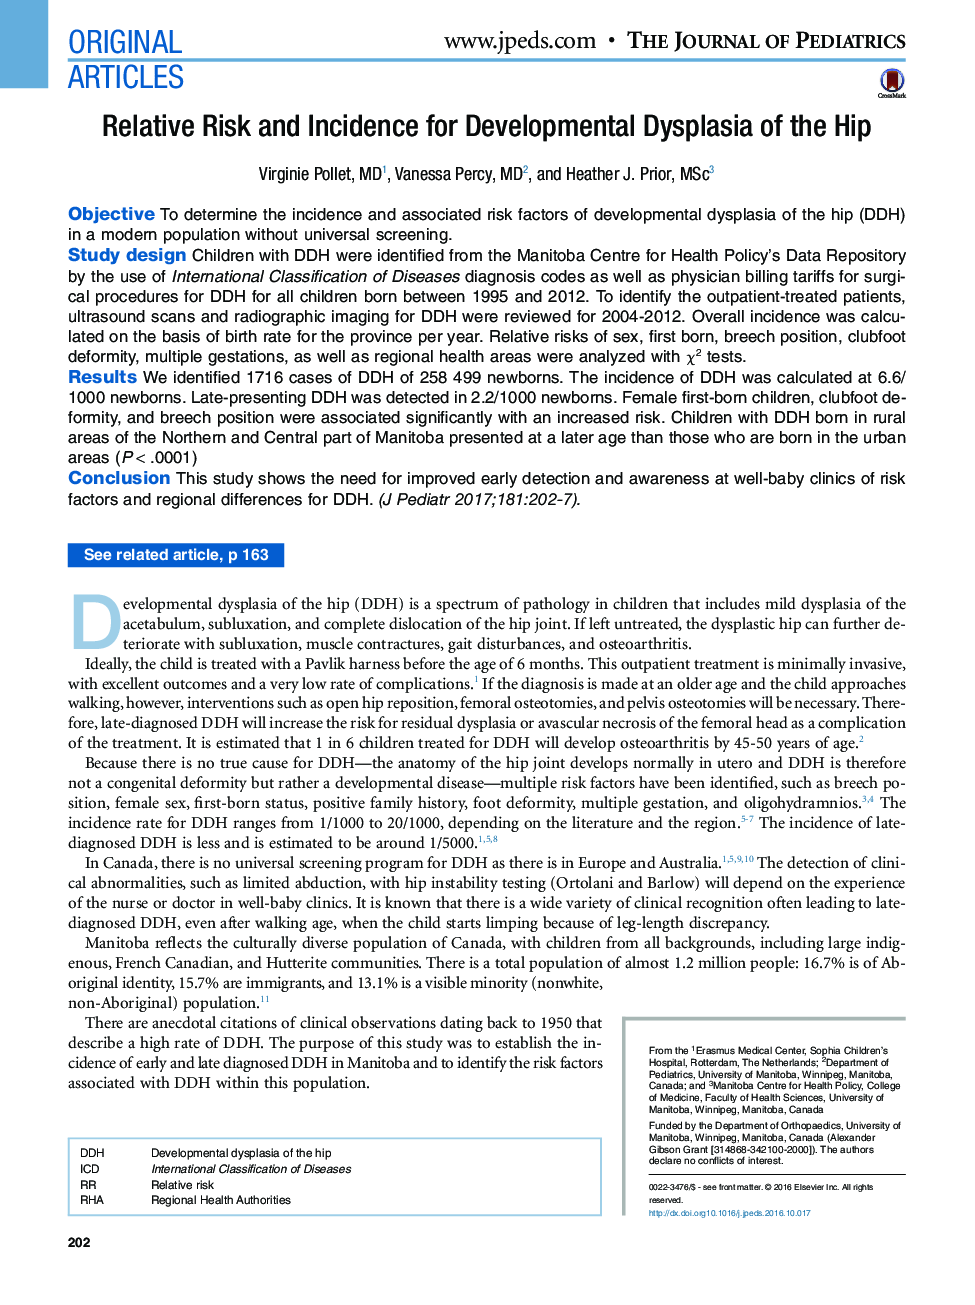 Original ArticlesRelative Risk and Incidence for Developmental Dysplasia of the Hip